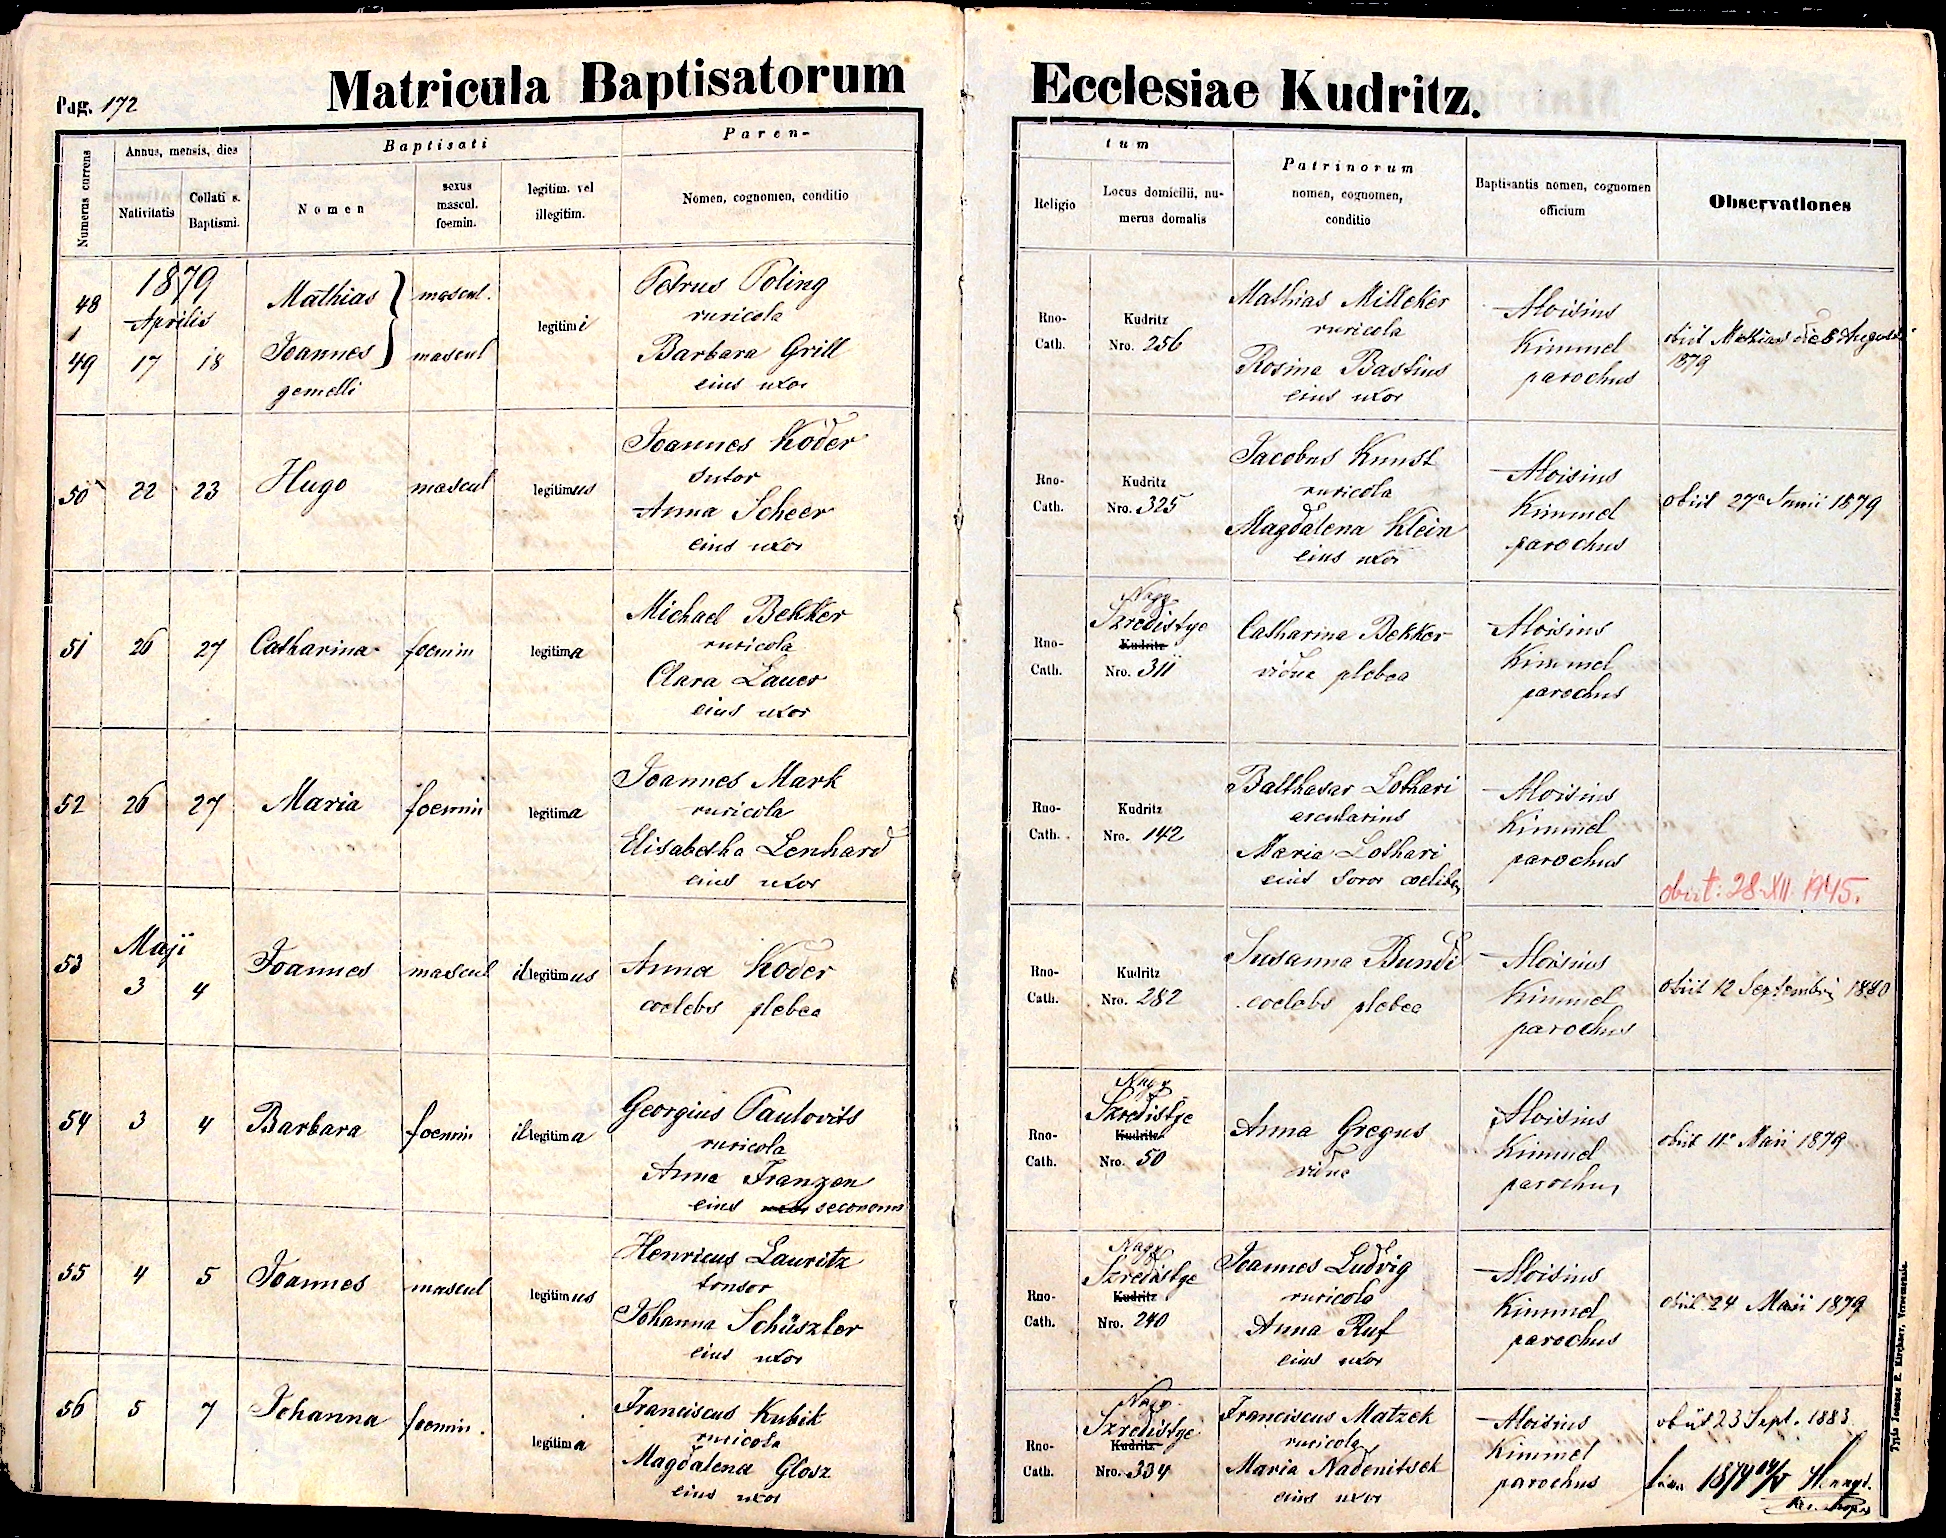 images/church_records/BIRTHS/1870-1879B/1879/172